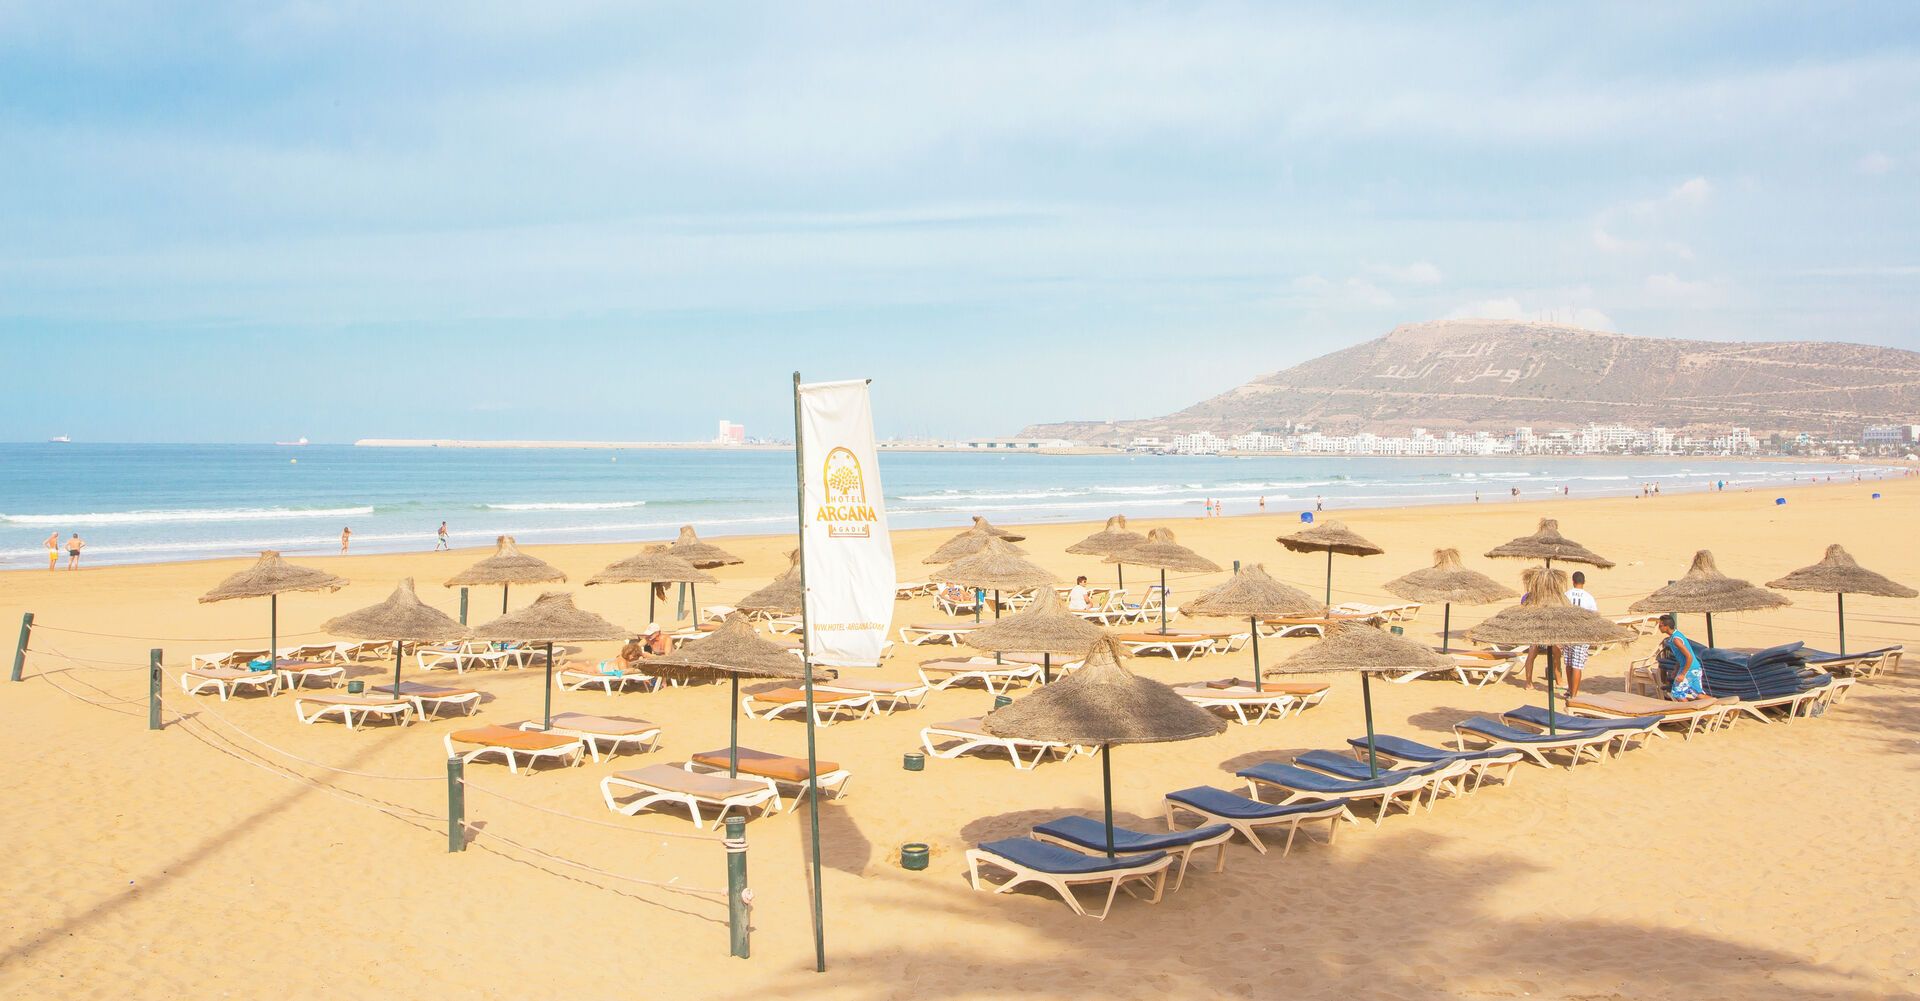 Maroc - Agadir - Hôtel Argana 4*